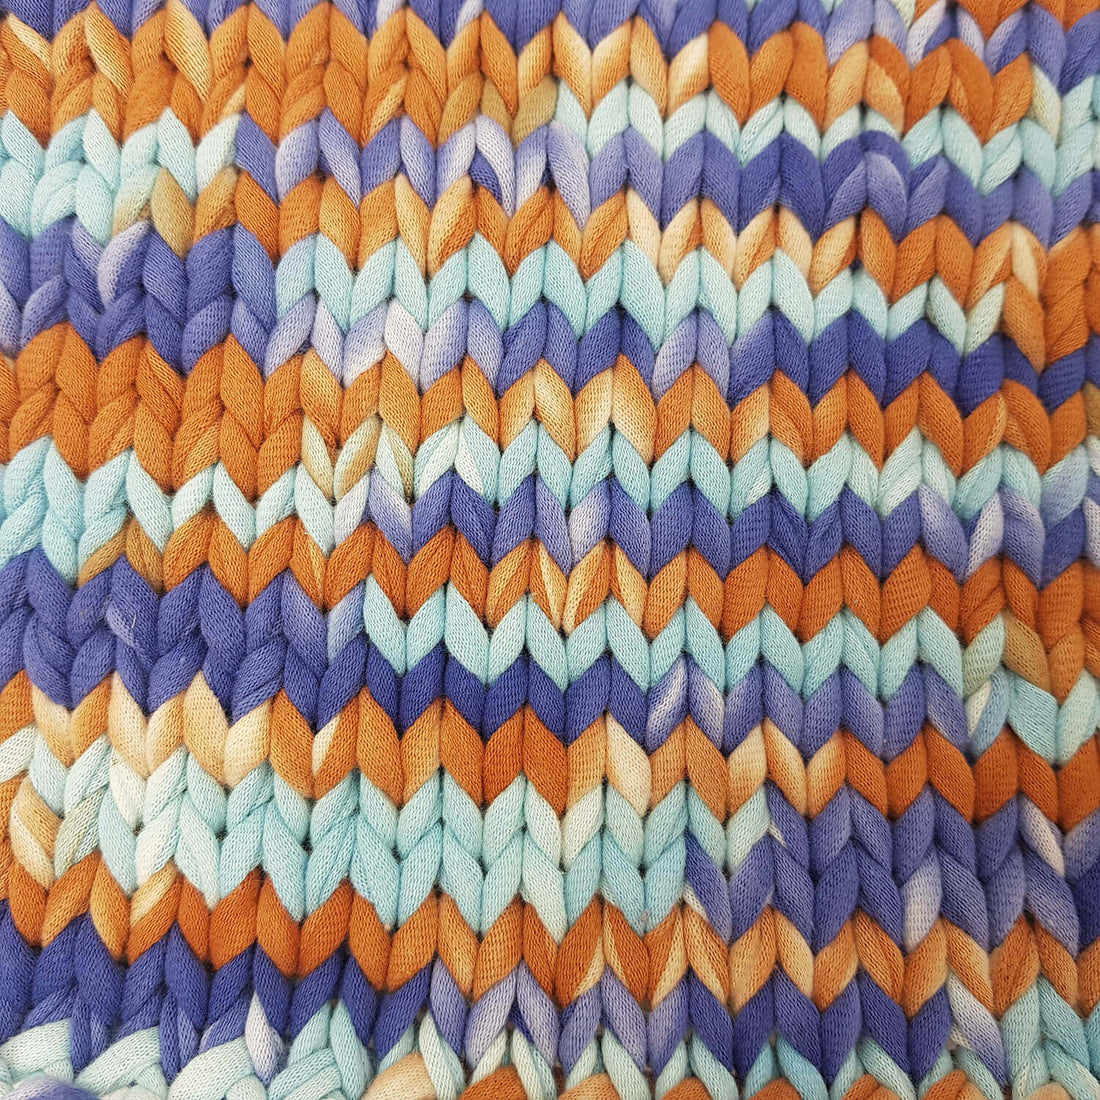 Kotton T-Shirt Yarn - Multi Color M13